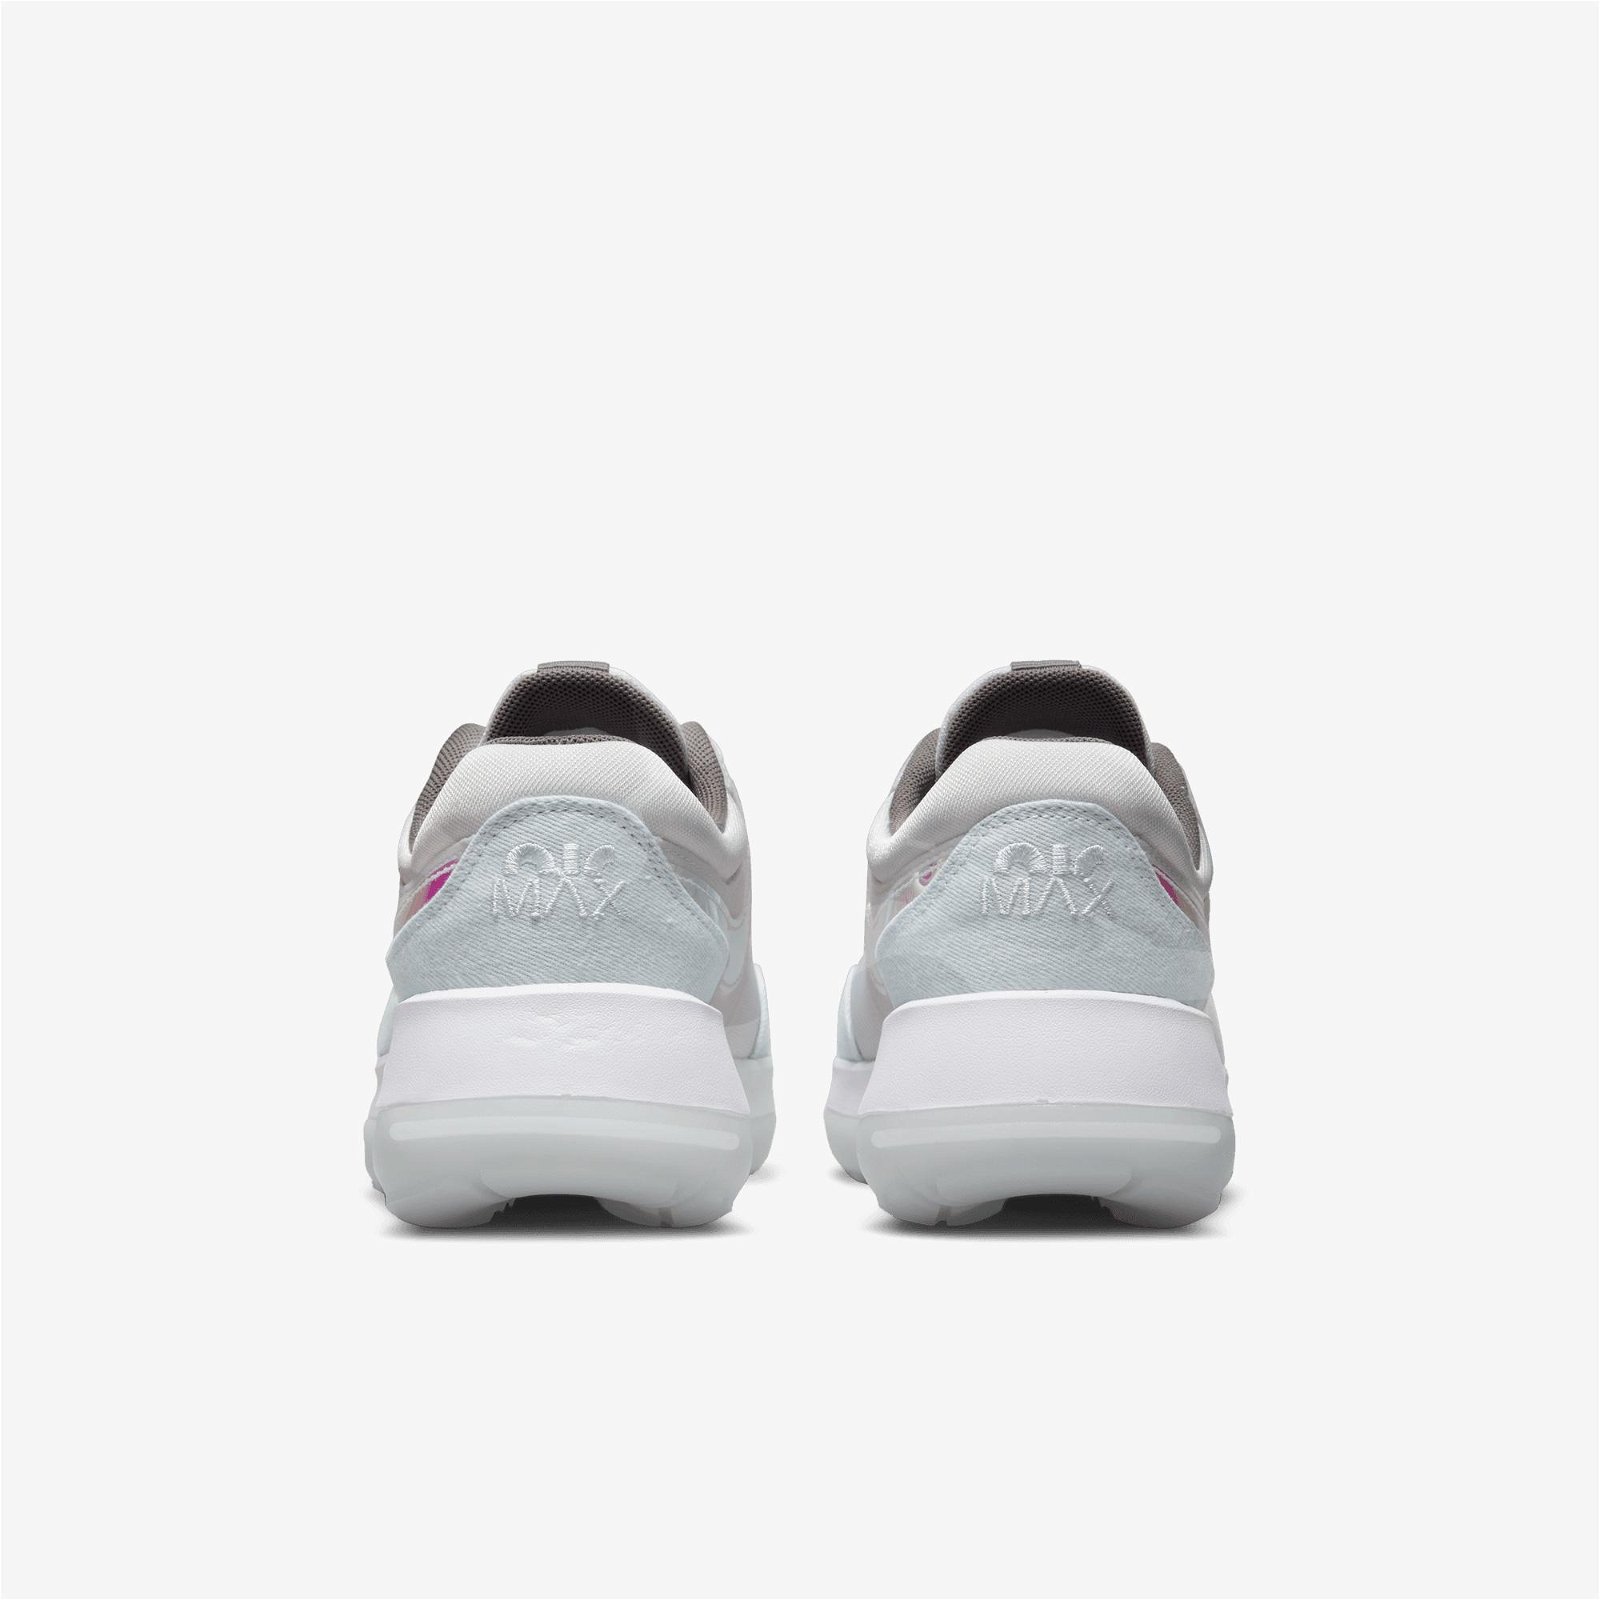 Nike Air Max Motif Beyaz-Mavi Spor Ayakkabı